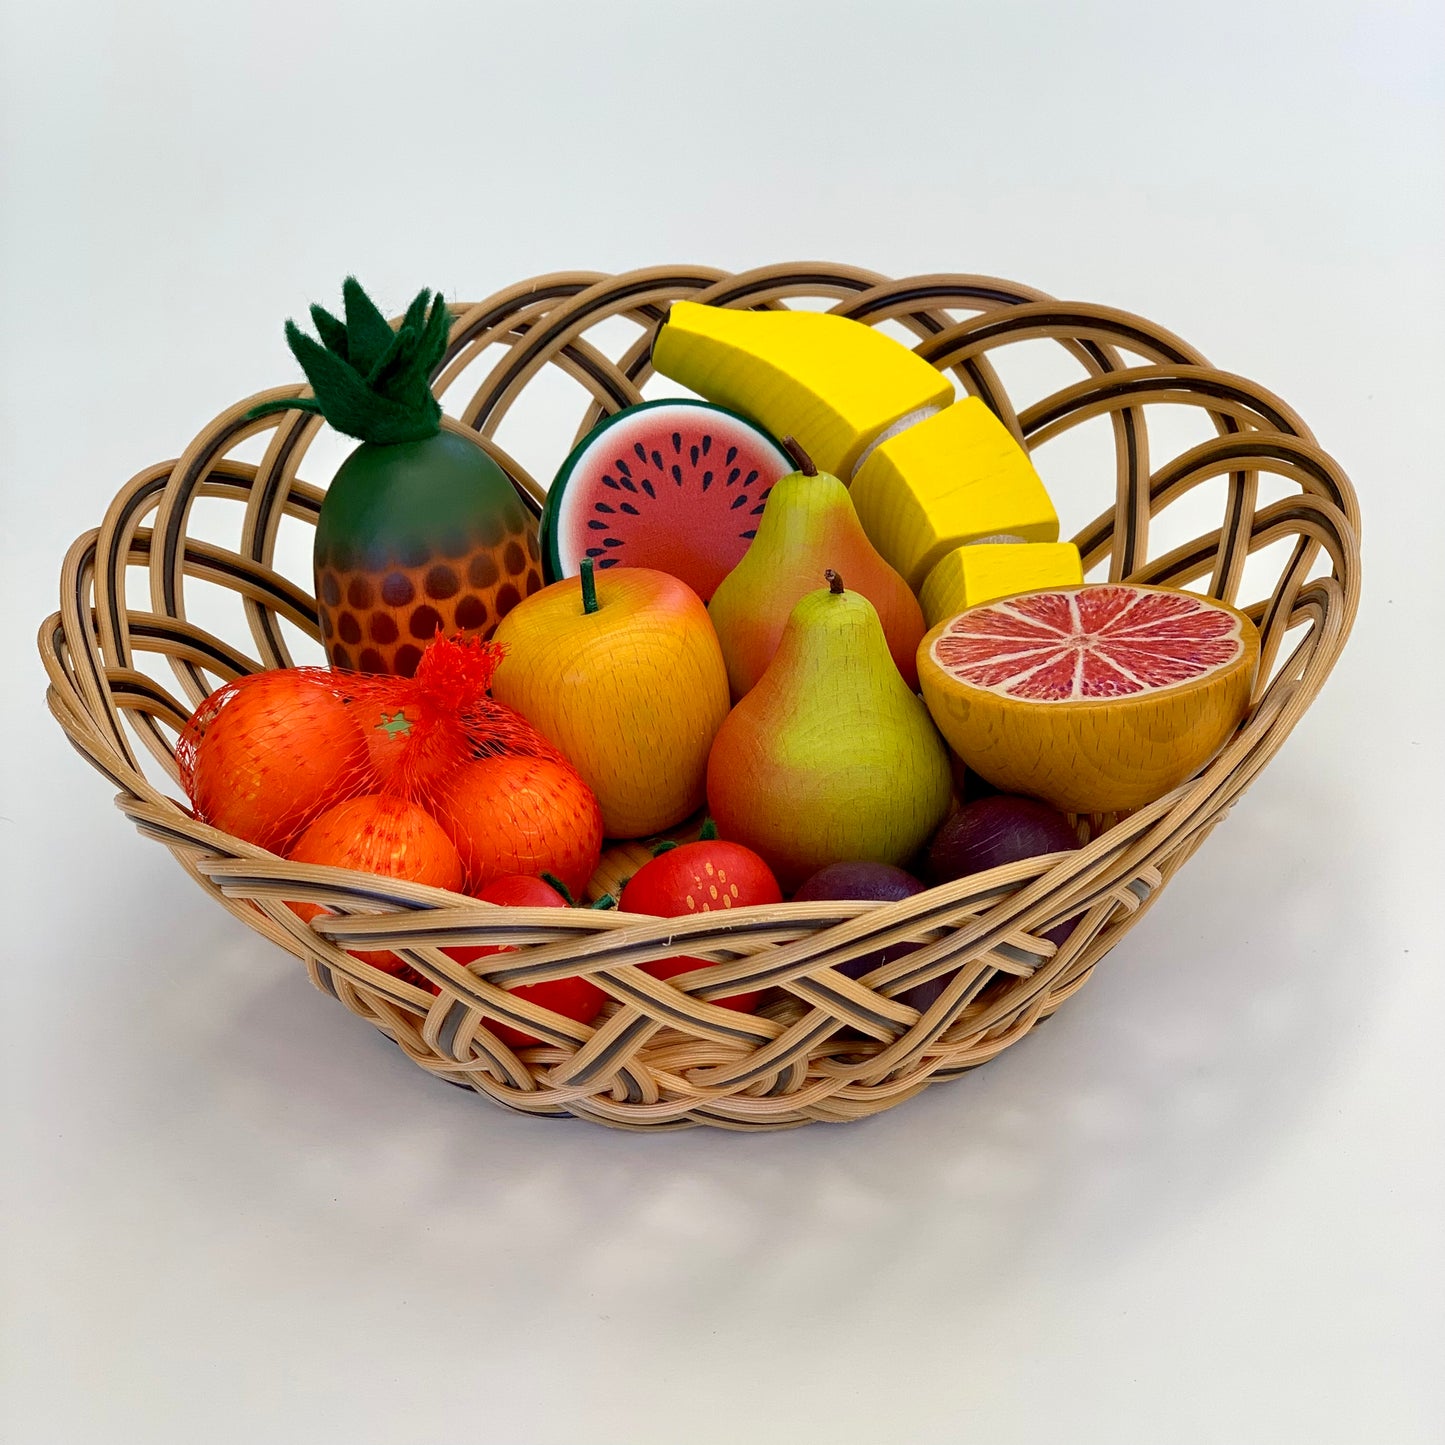 erzi basket of wooden fruit play food